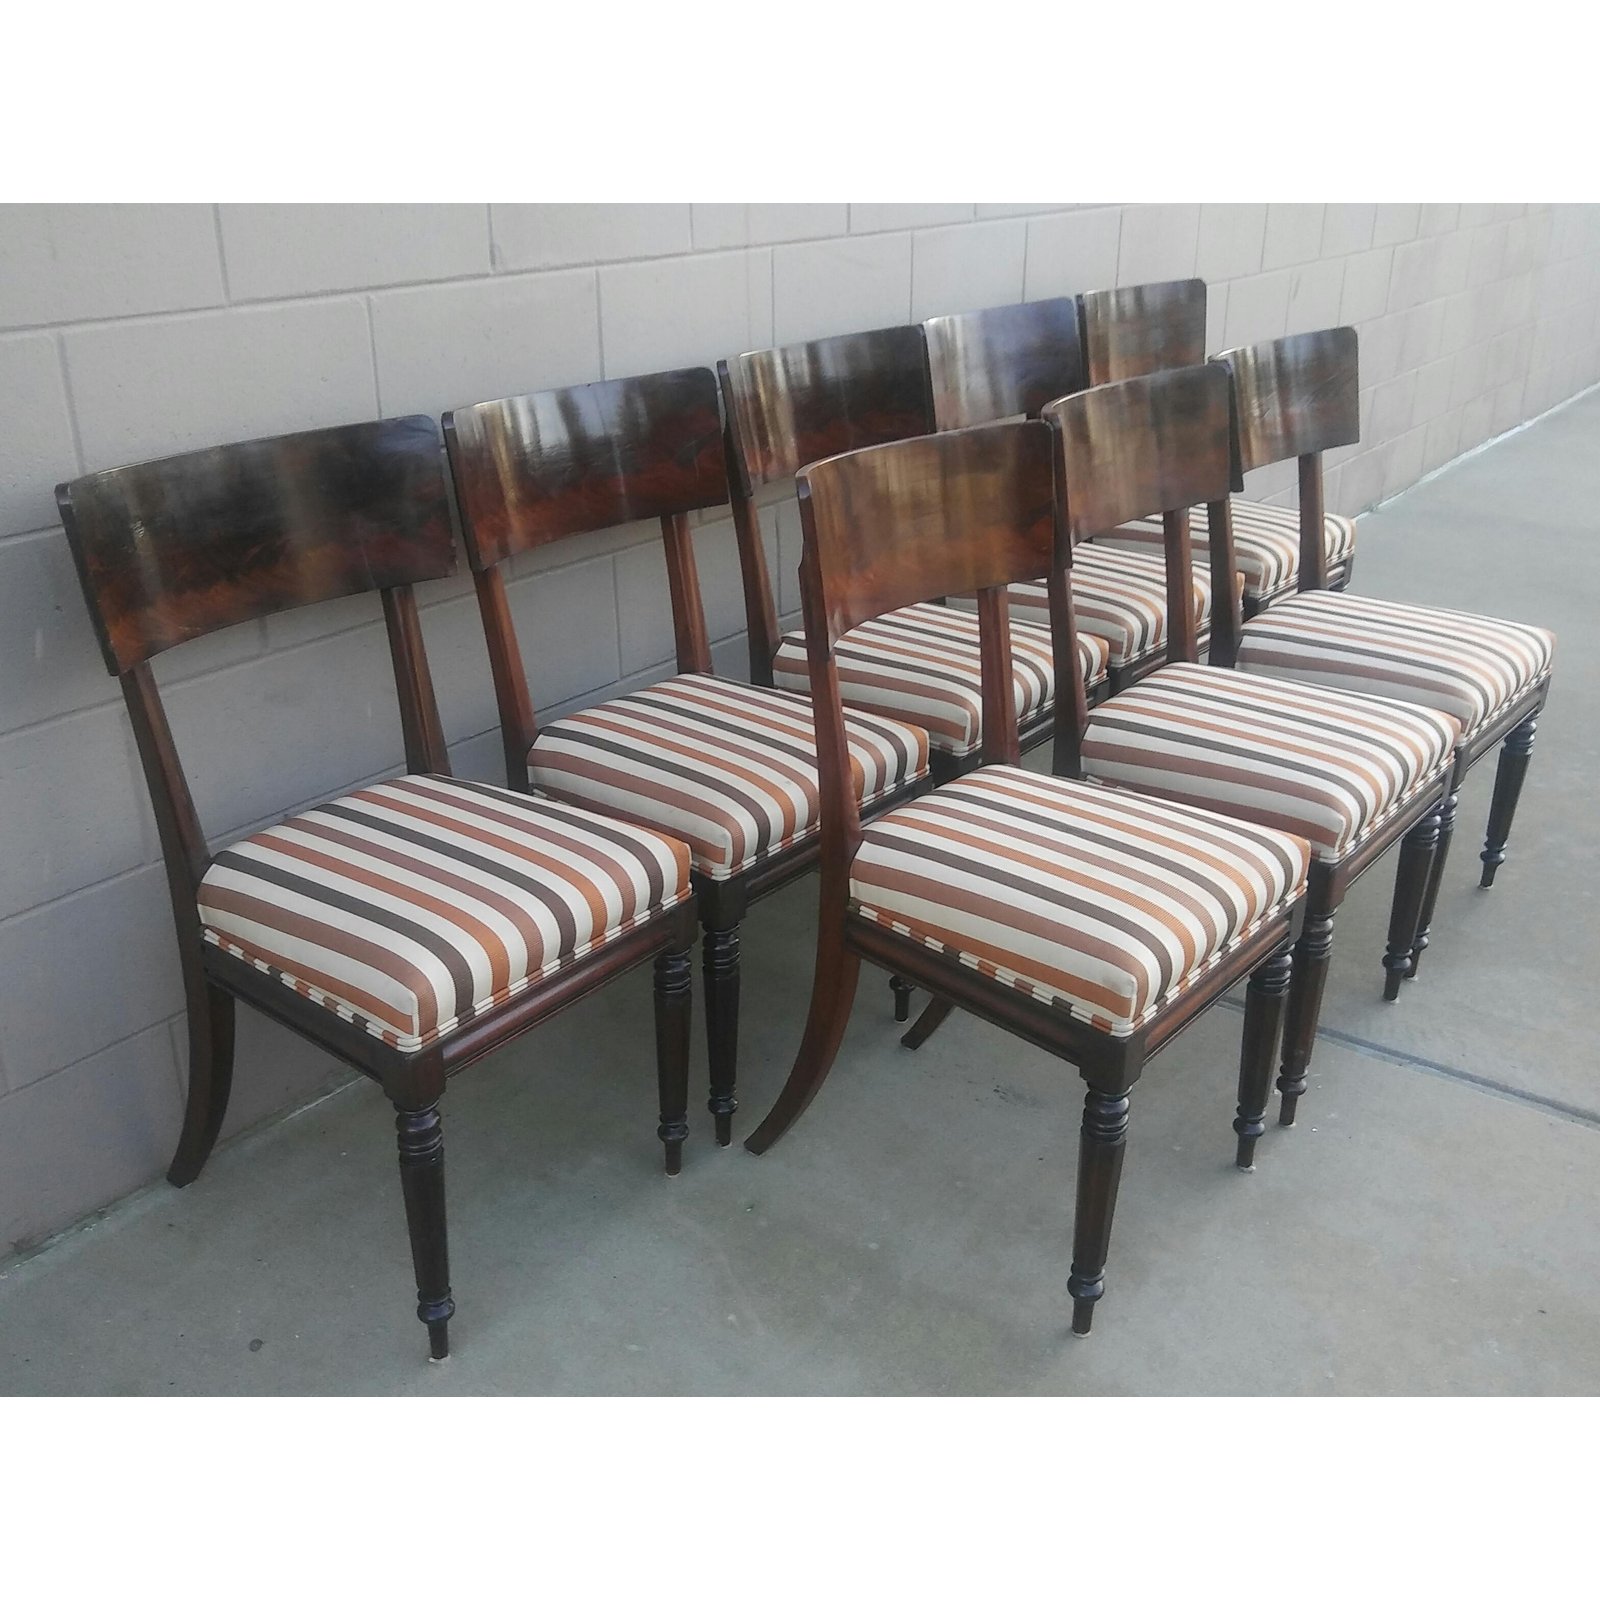 regency-mahogany-klismos-dining-chairs-set-of-8-0464.jpg